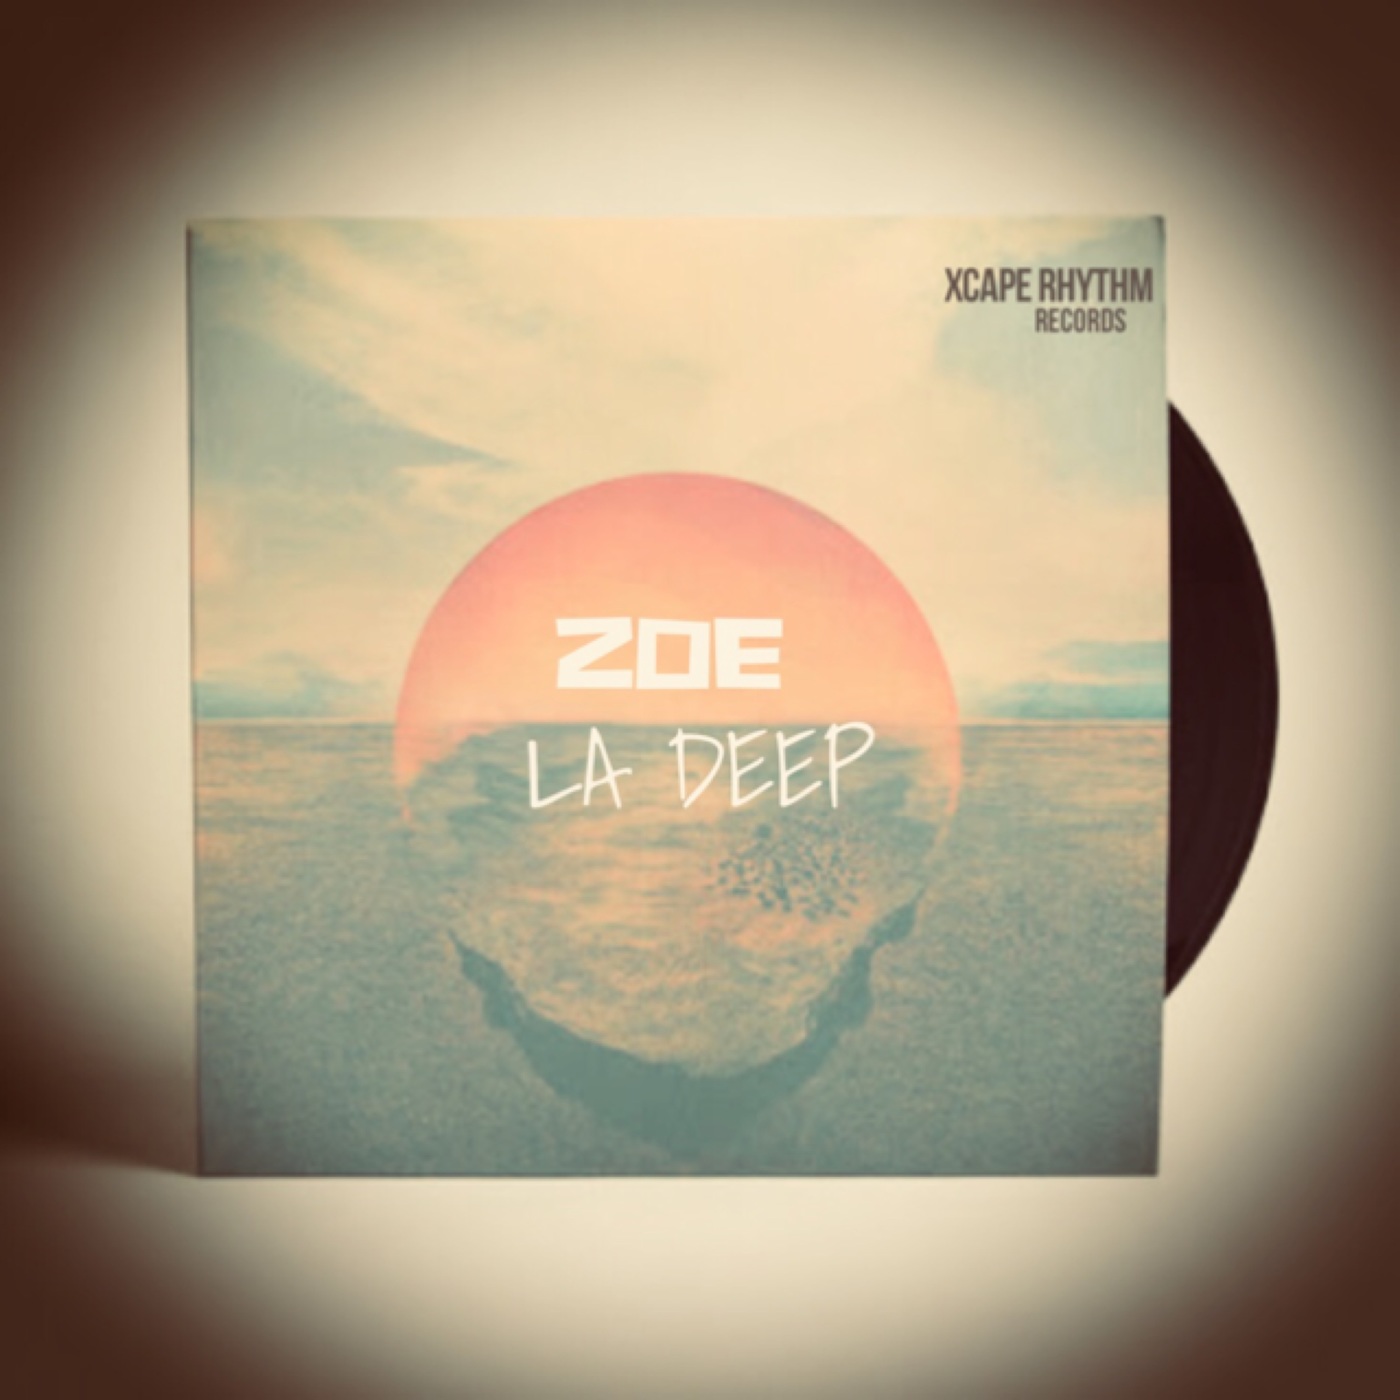 La Deep - Zoe / Xcape Rhythm Records